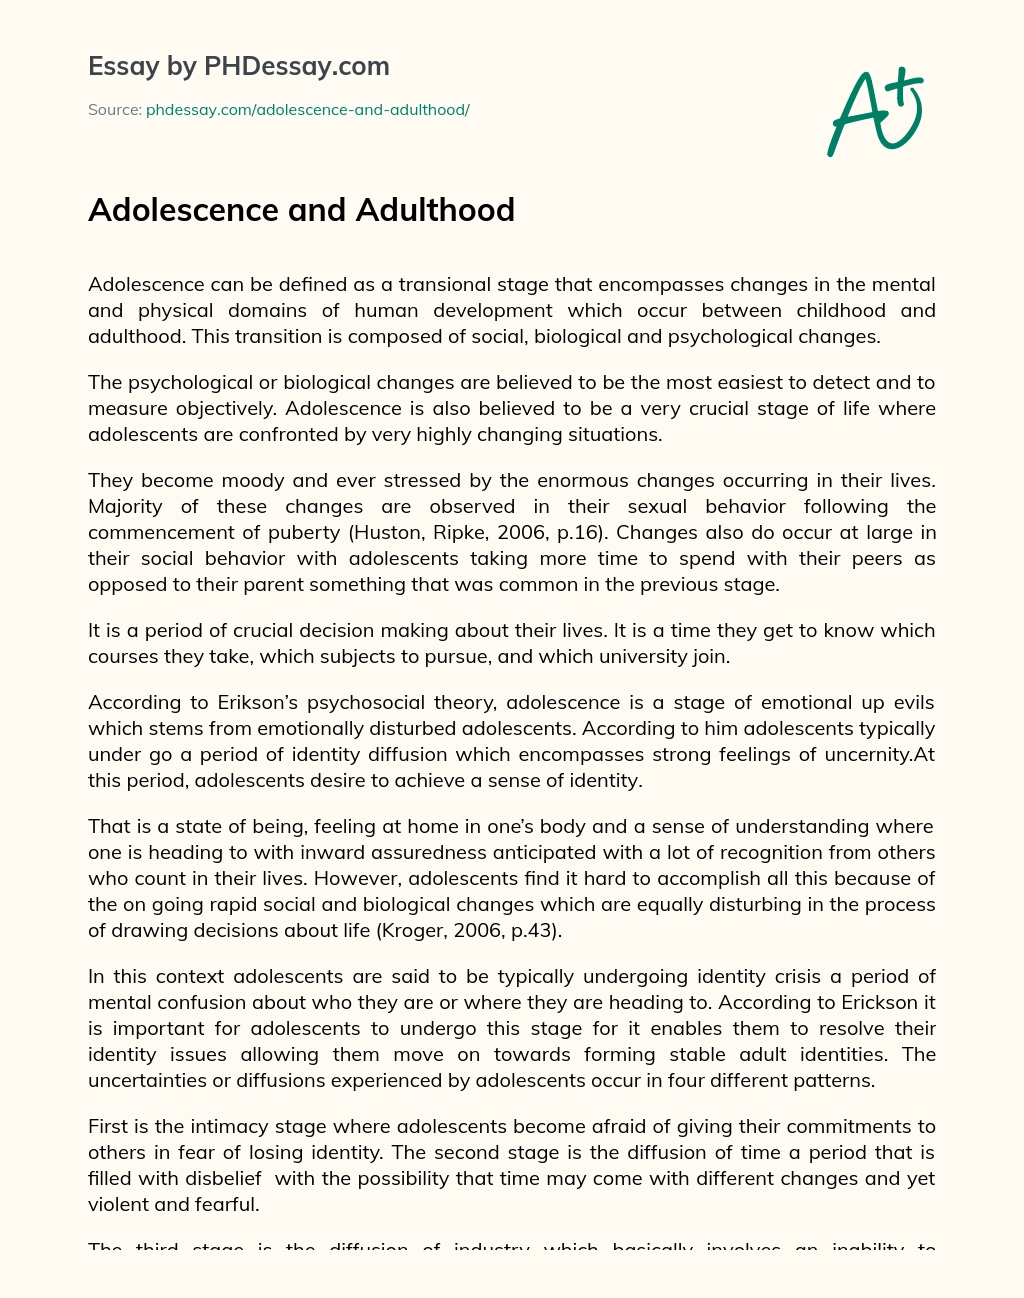 Adolescence and Adulthood essay